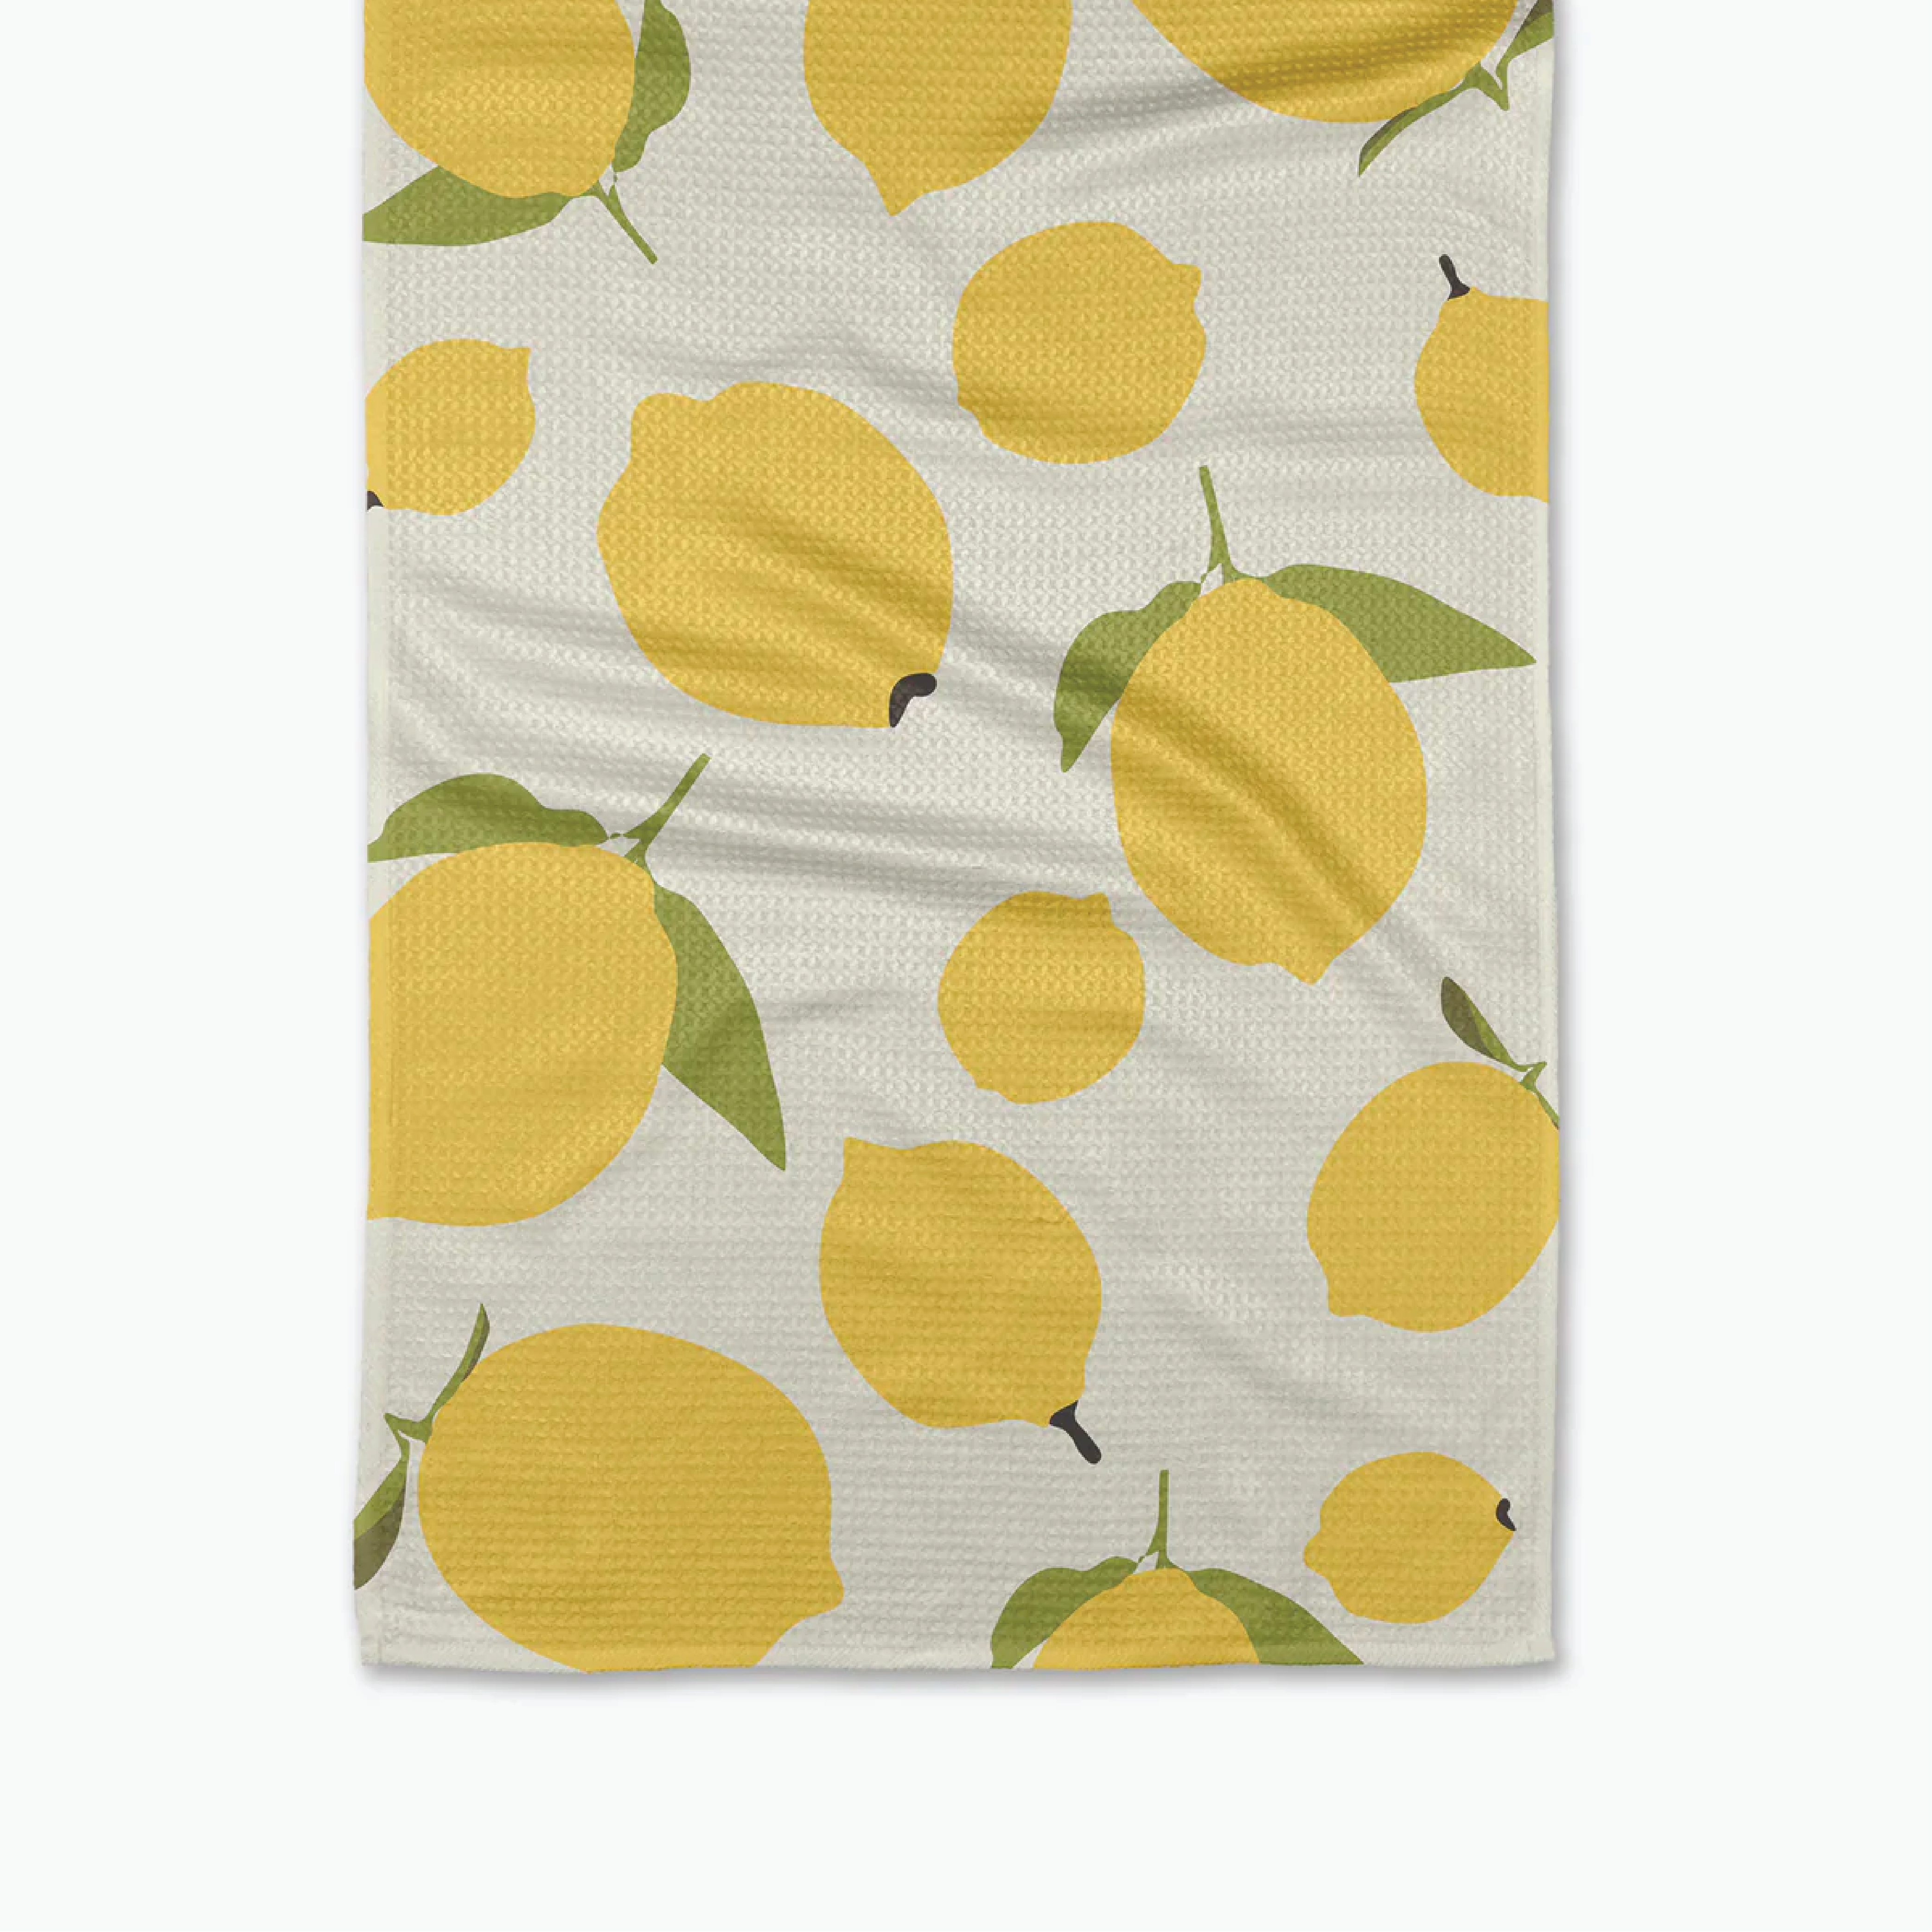 Geometry House - Sunny Lemons